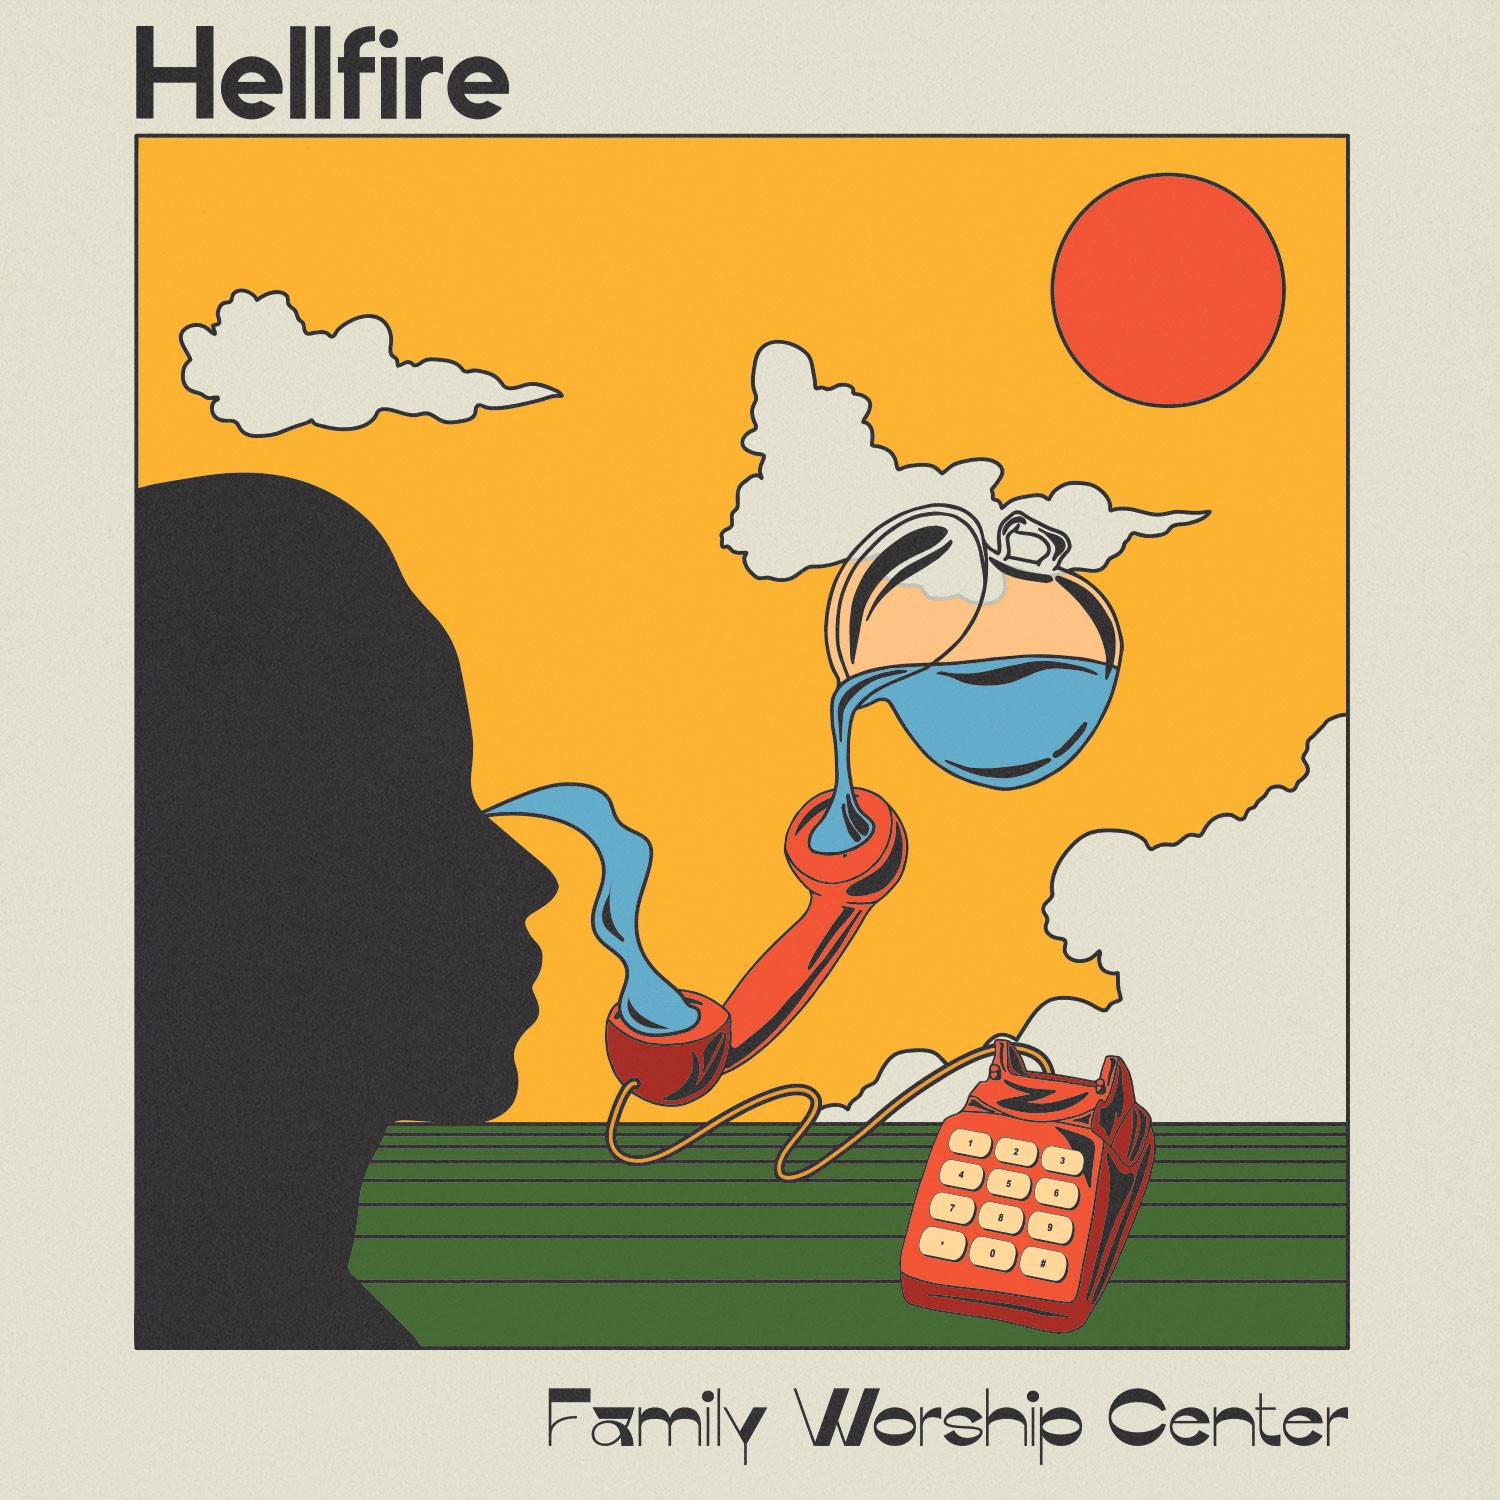 Family Worship Center “Hellfire” single artwork